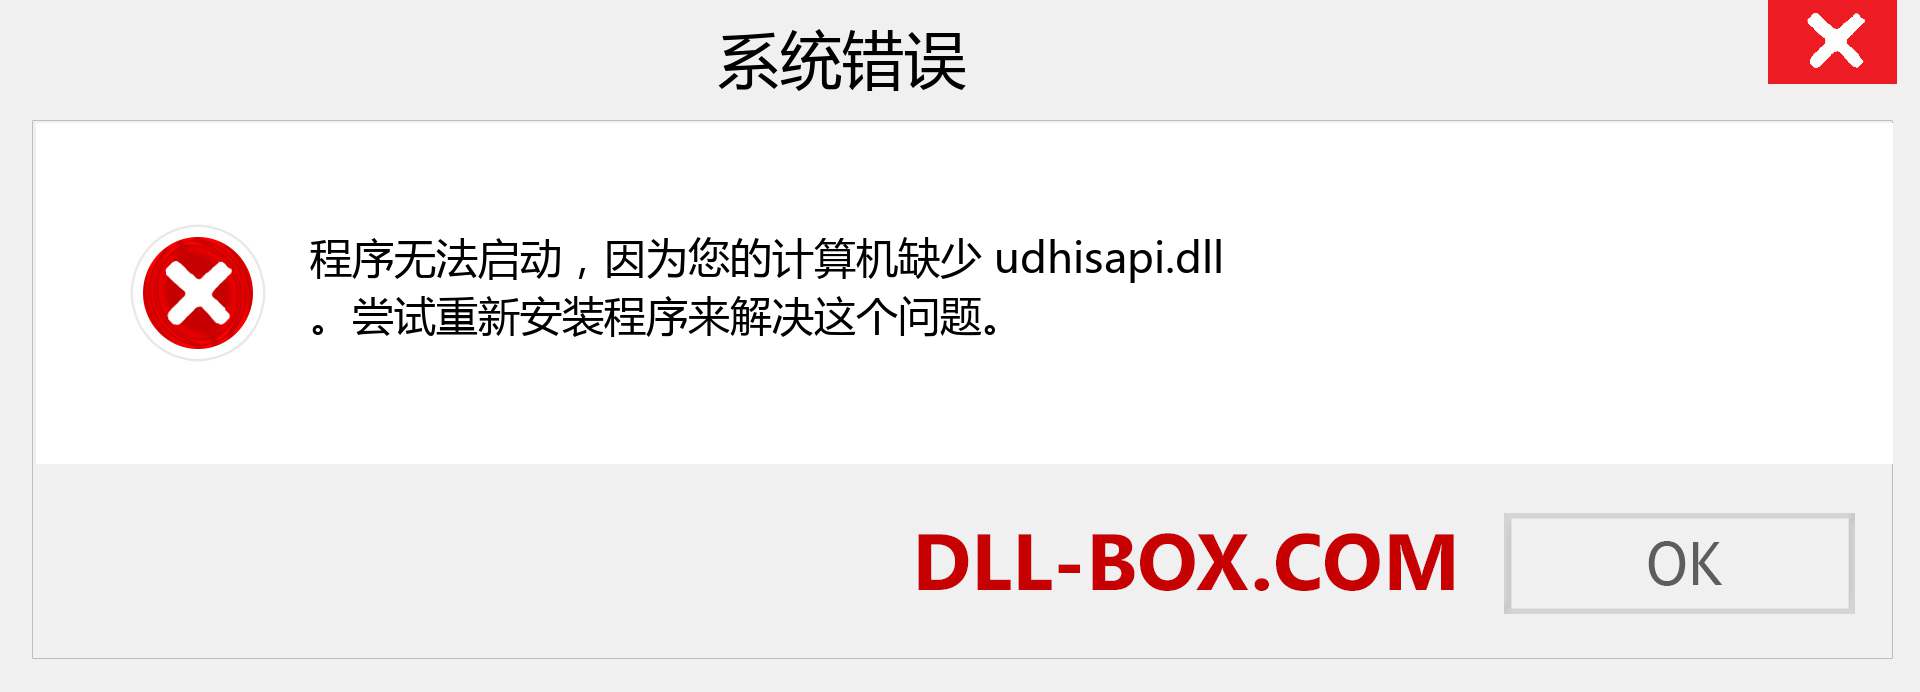 udhisapi.dll 文件丢失？。 适用于 Windows 7、8、10 的下载 - 修复 Windows、照片、图像上的 udhisapi dll 丢失错误